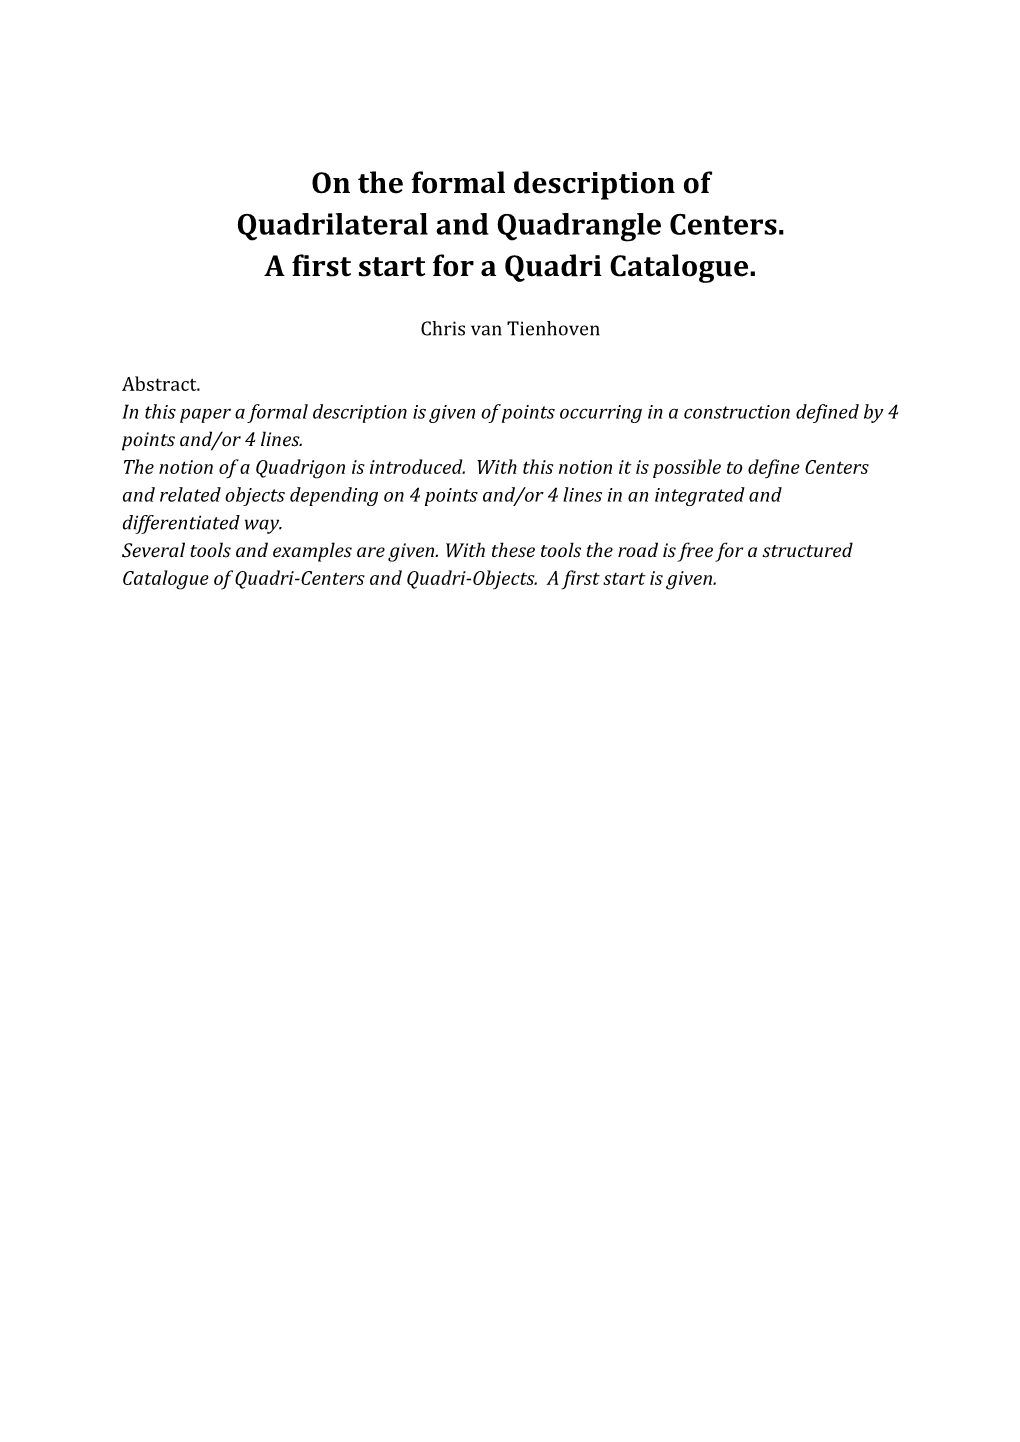 On the Formal Description of Quadrilateral and Quadrangle Centers